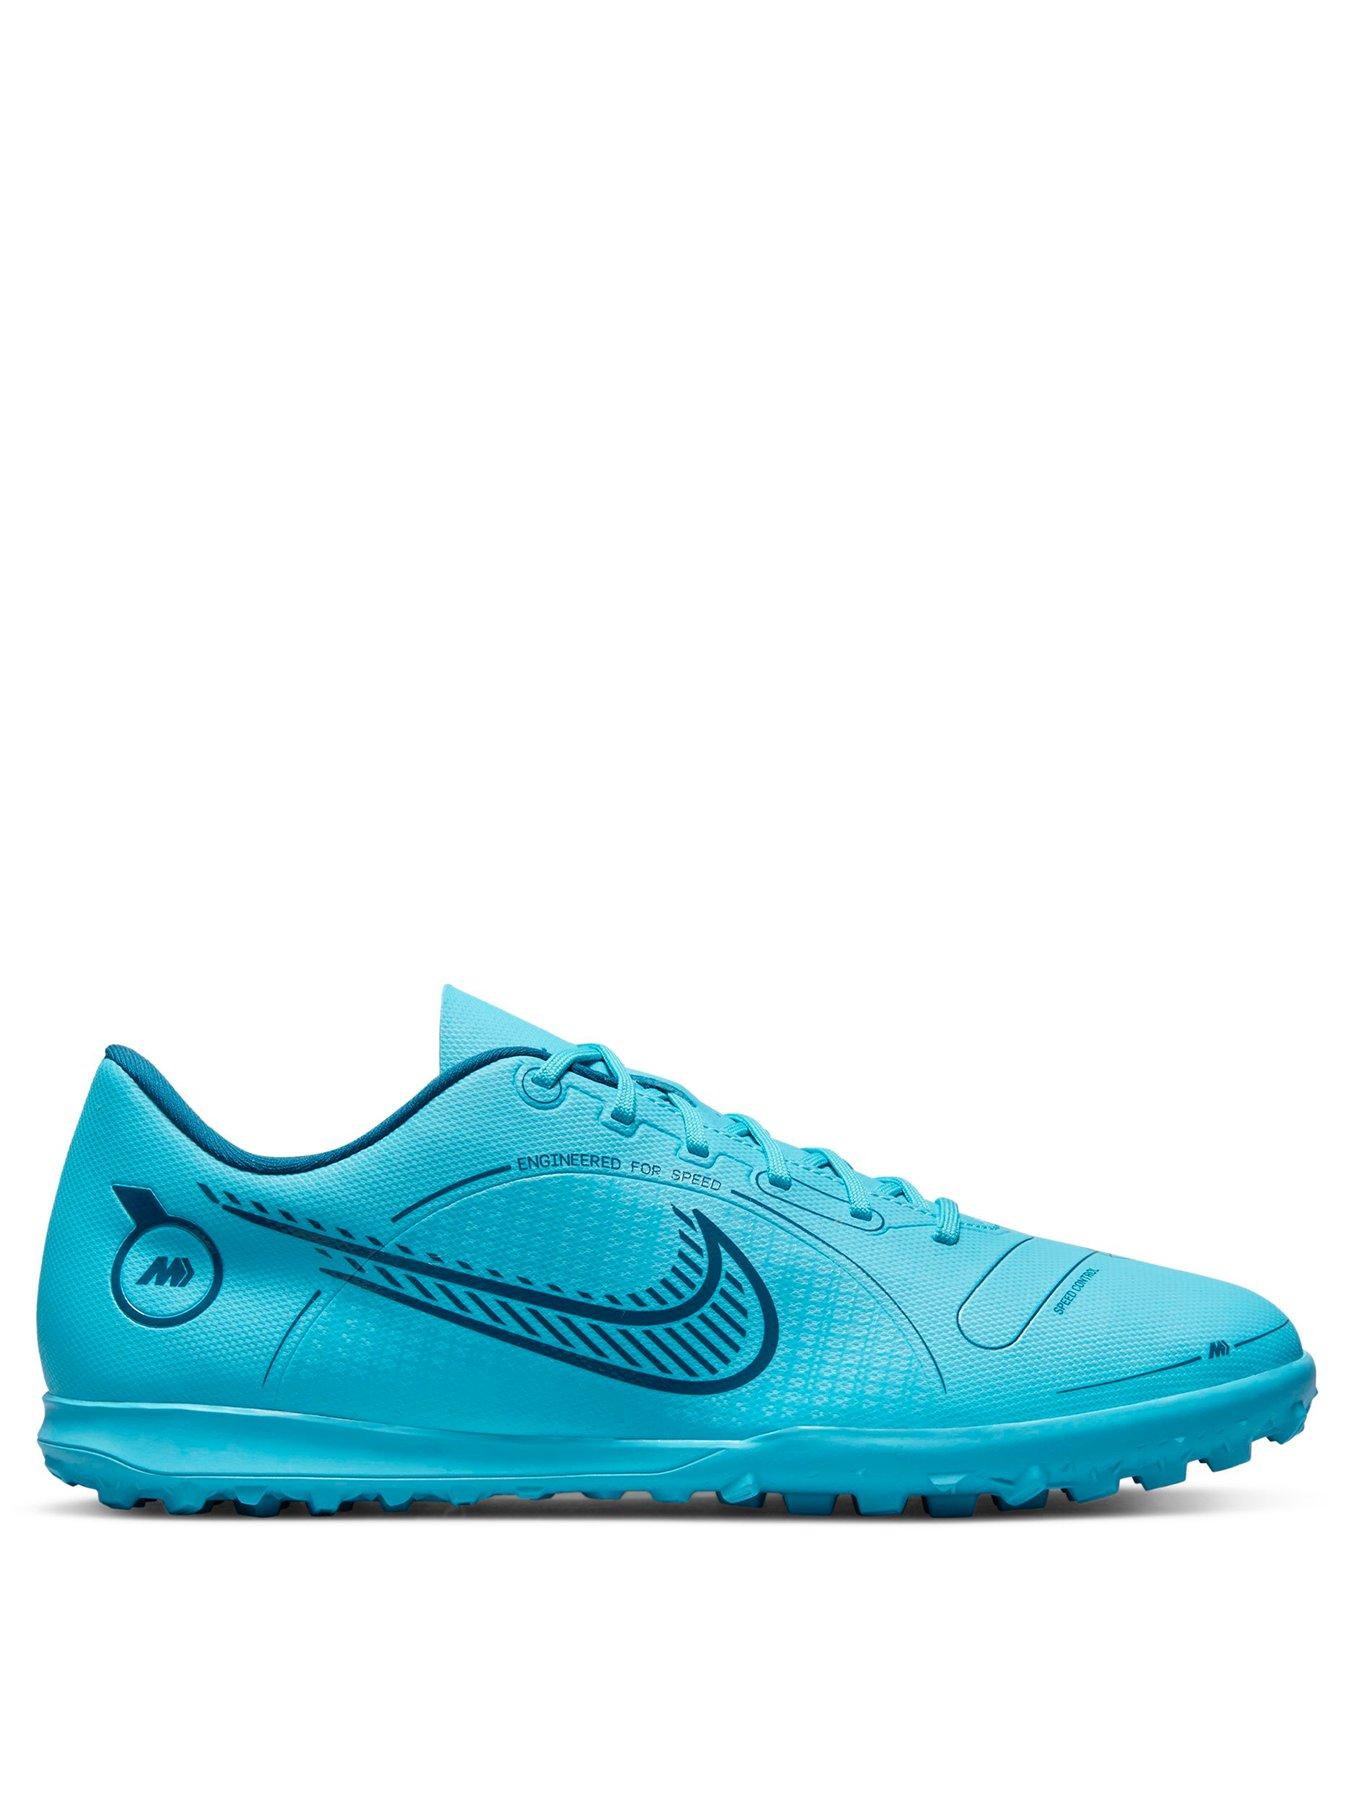 Nike Mercurial Vapor 14 Club Astro Turf Football Boots - Blue | very.co.uk